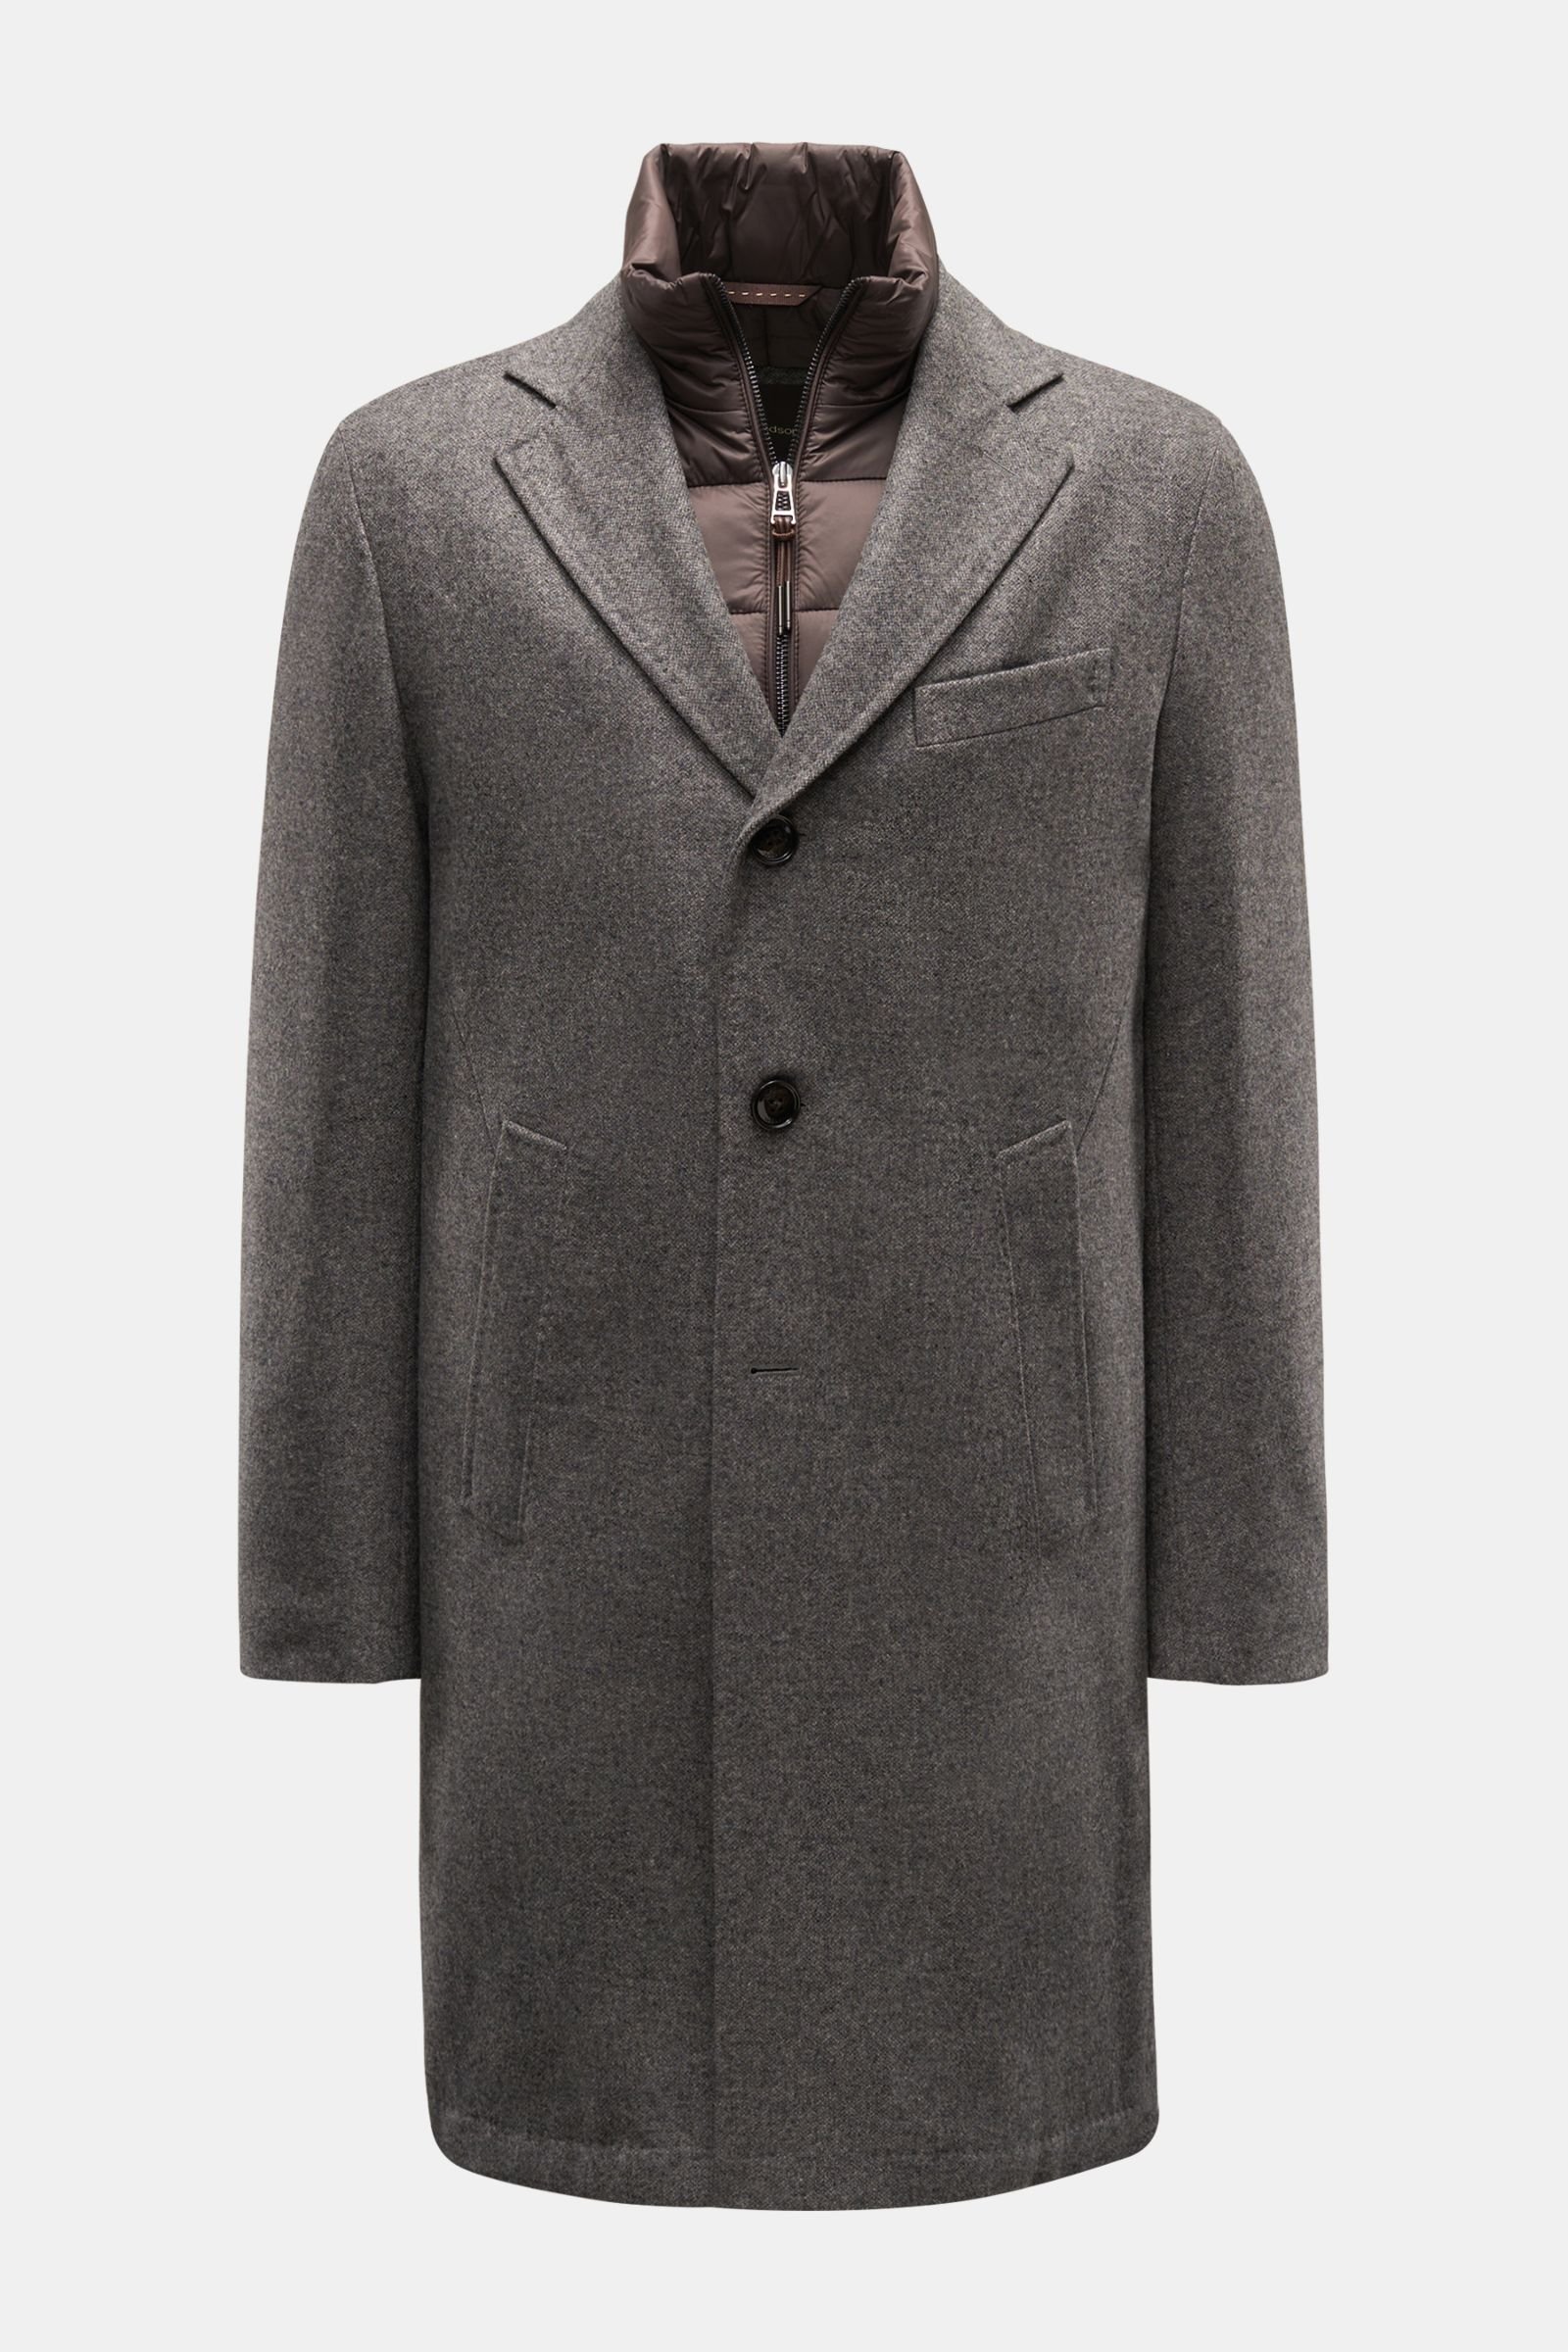 WINDSOR coat 'Cellano' dark grey | BRAUN Hamburg